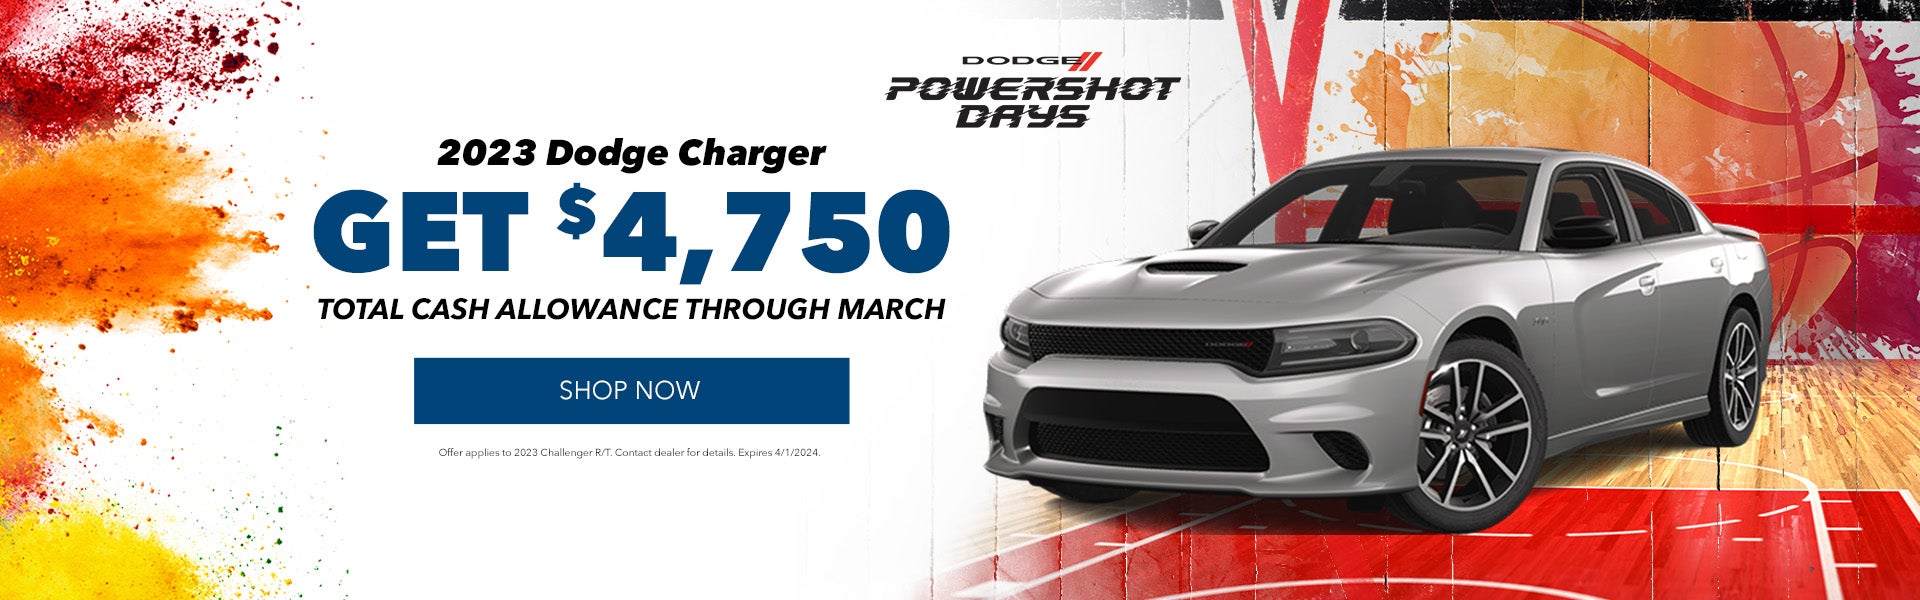 2023 Dodge Charger $4,750 Cash Allowance